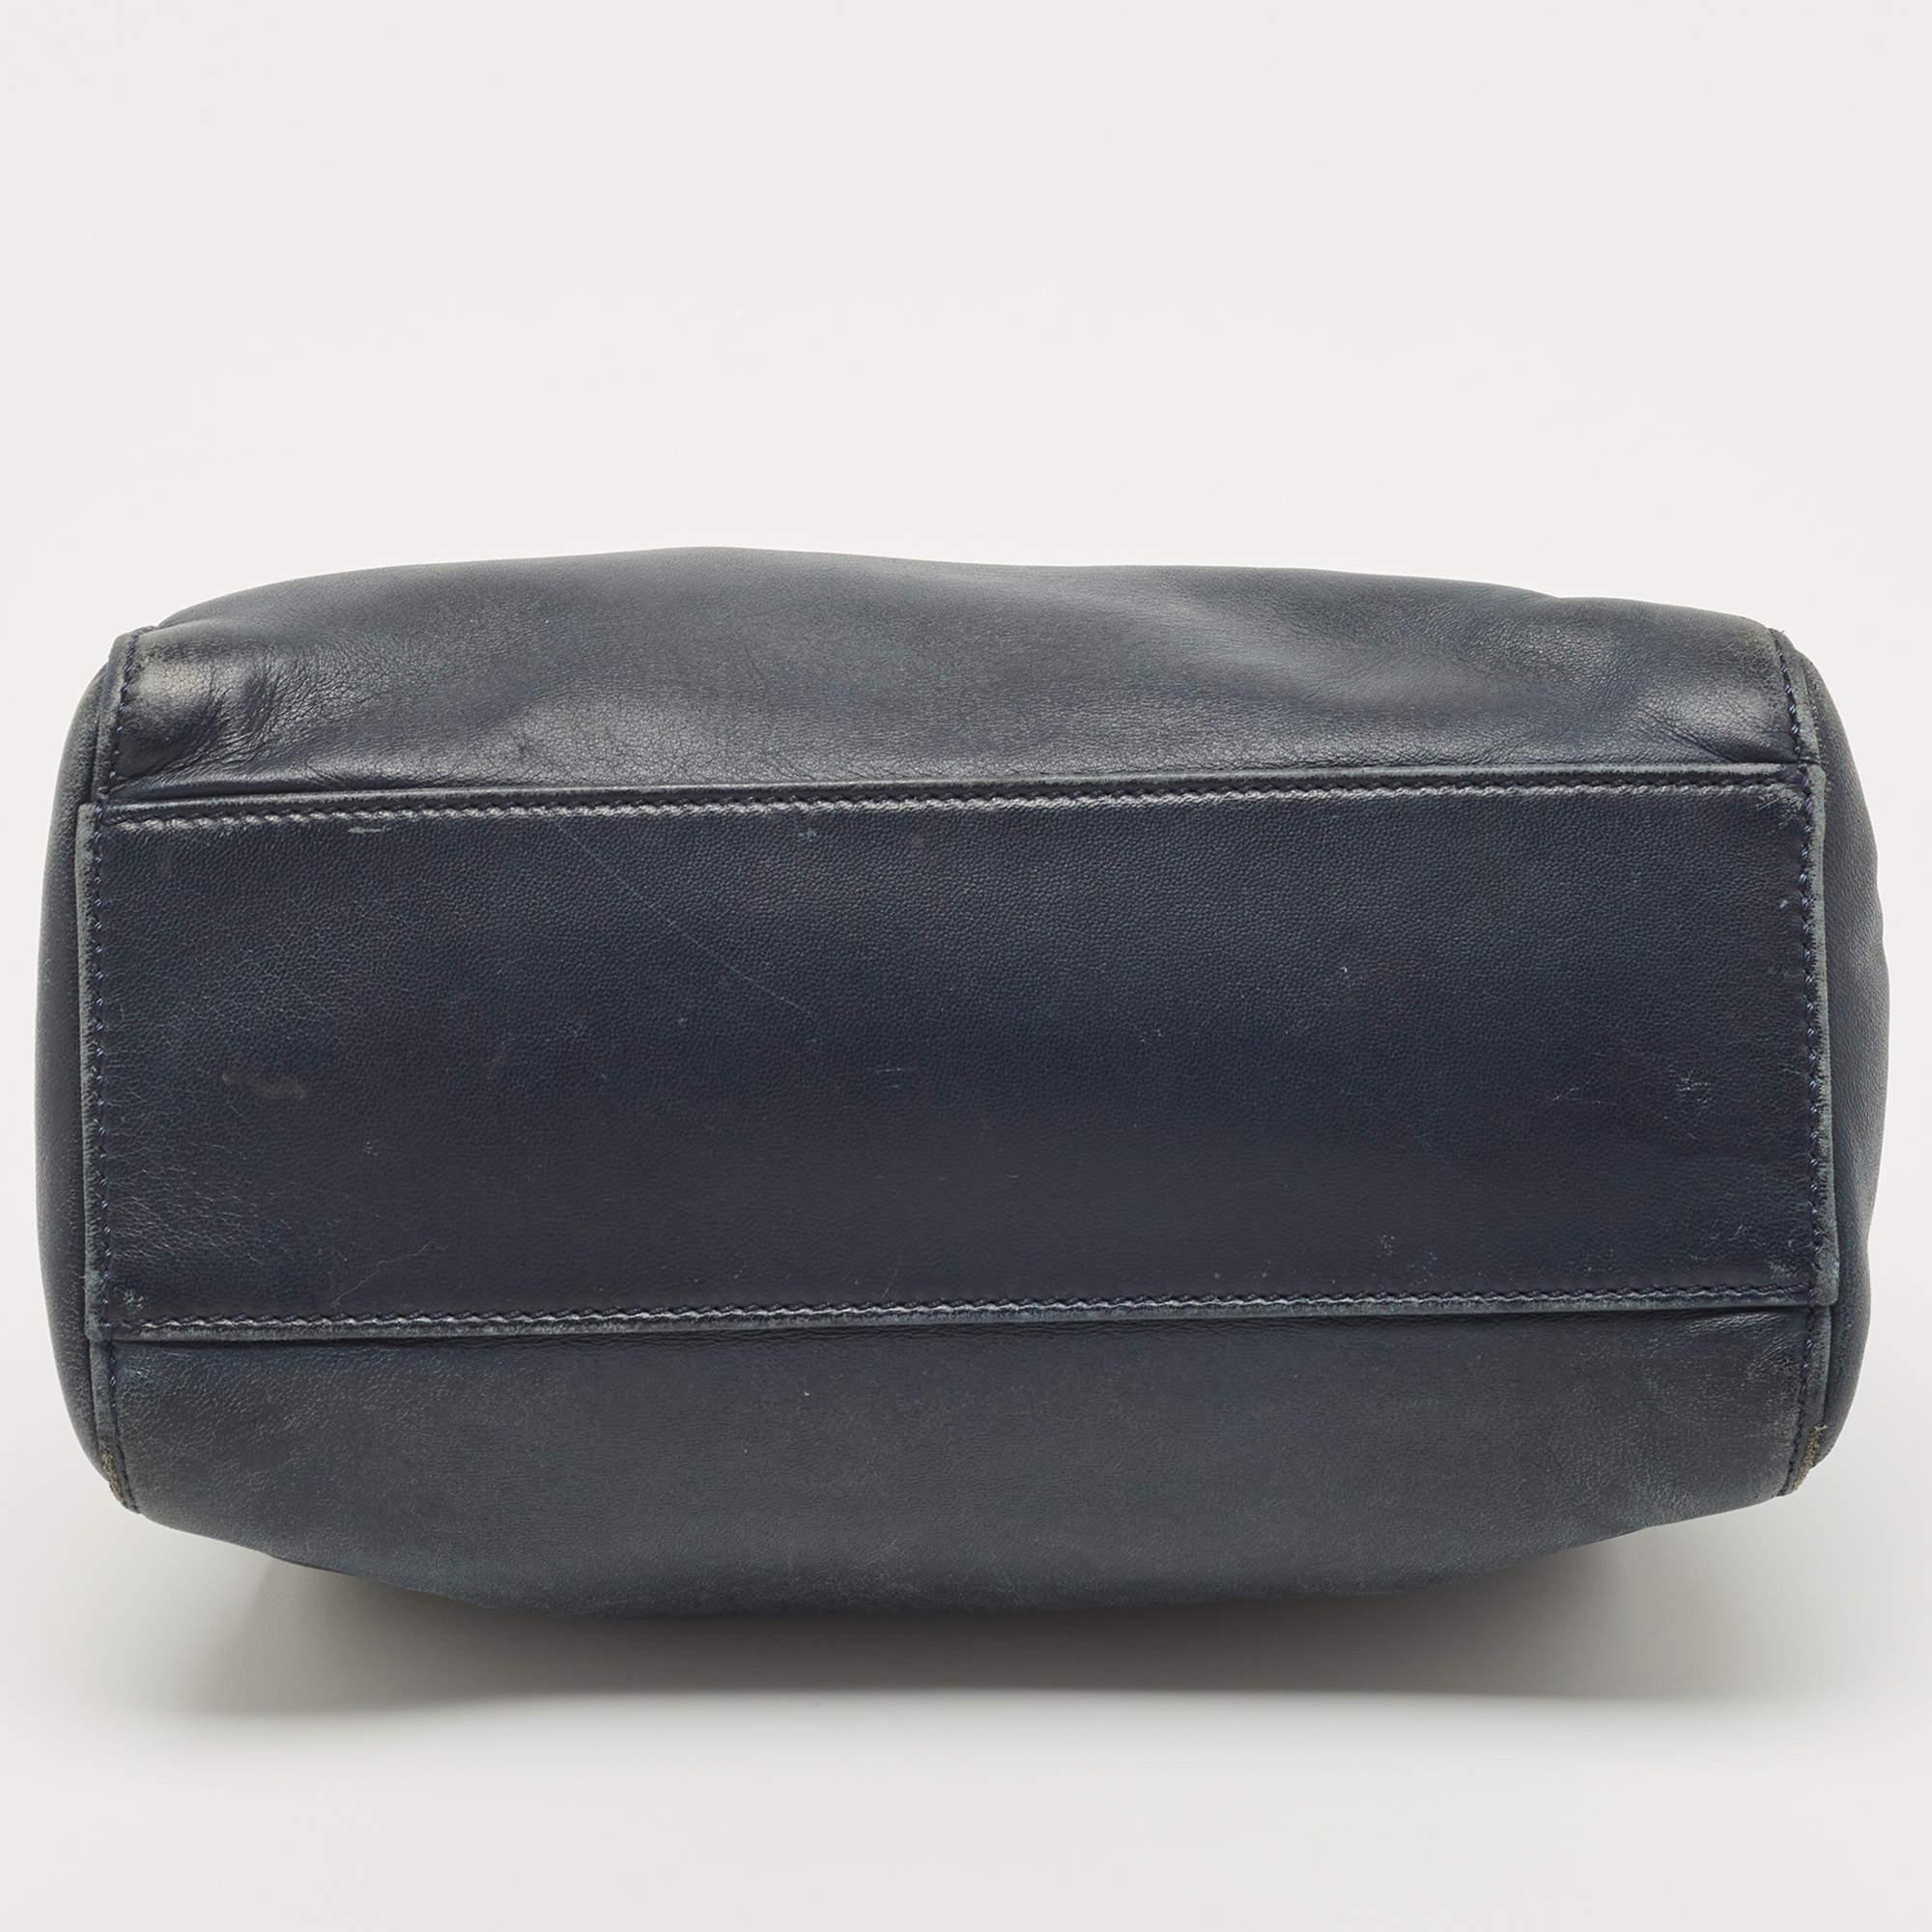 Women's Fendi Navy Blue Leather Mini Peekaboo Top Handle Bag